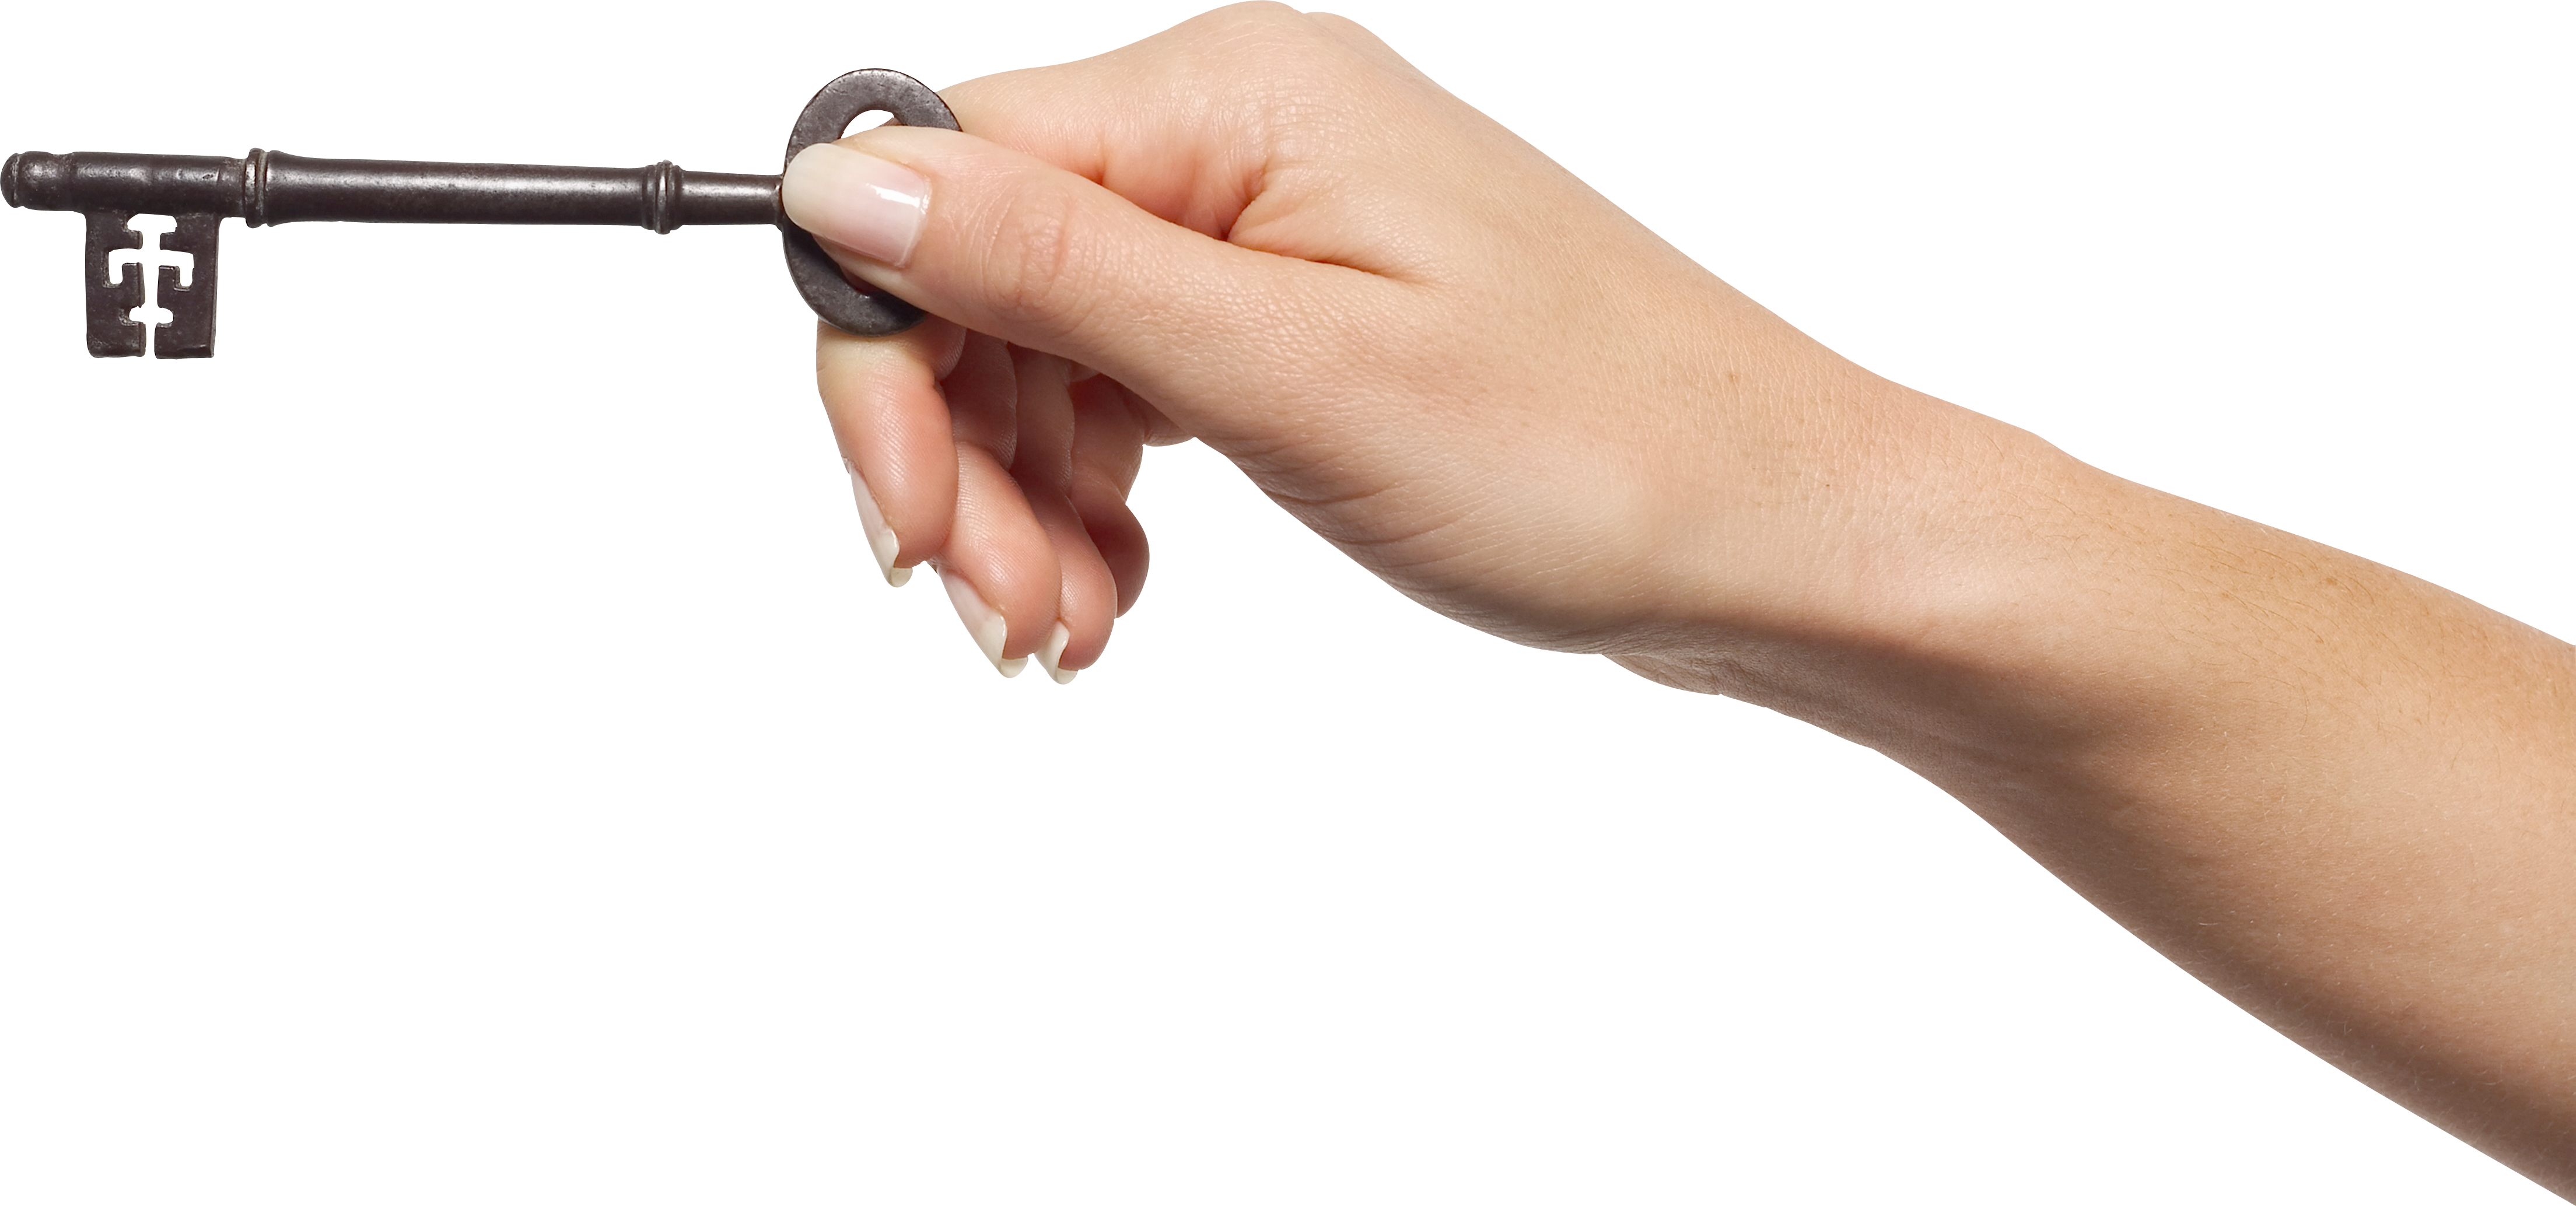 Hand holding key three. Nail clipart metal object